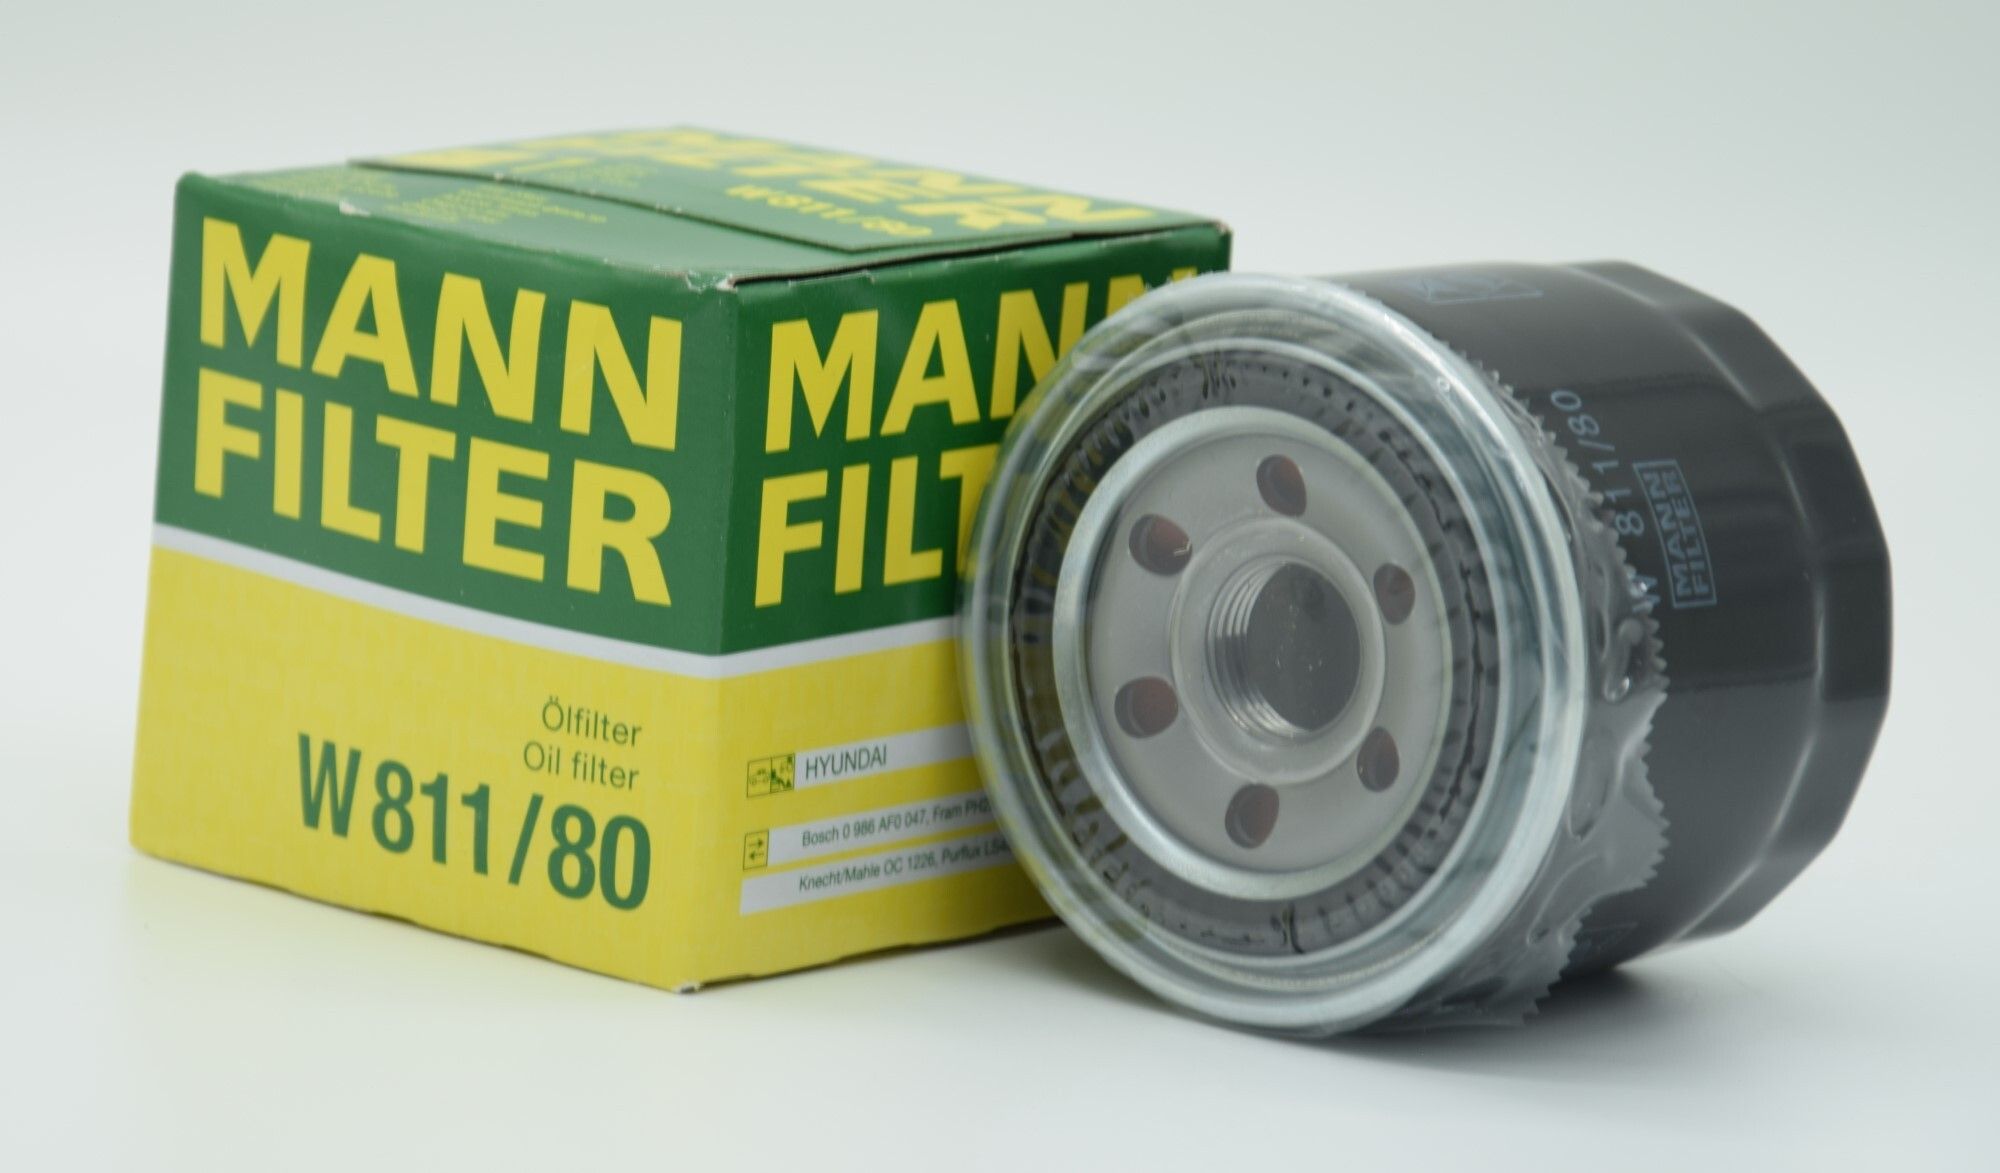 80 filter. Фильтр масляный Mann w 811/80. W81180 масляный фильтр (Mann-Filter). W81180 Mann-Filter фильтр масляный Mann w 811/80. Фильтр Манн w811/80 Китай.